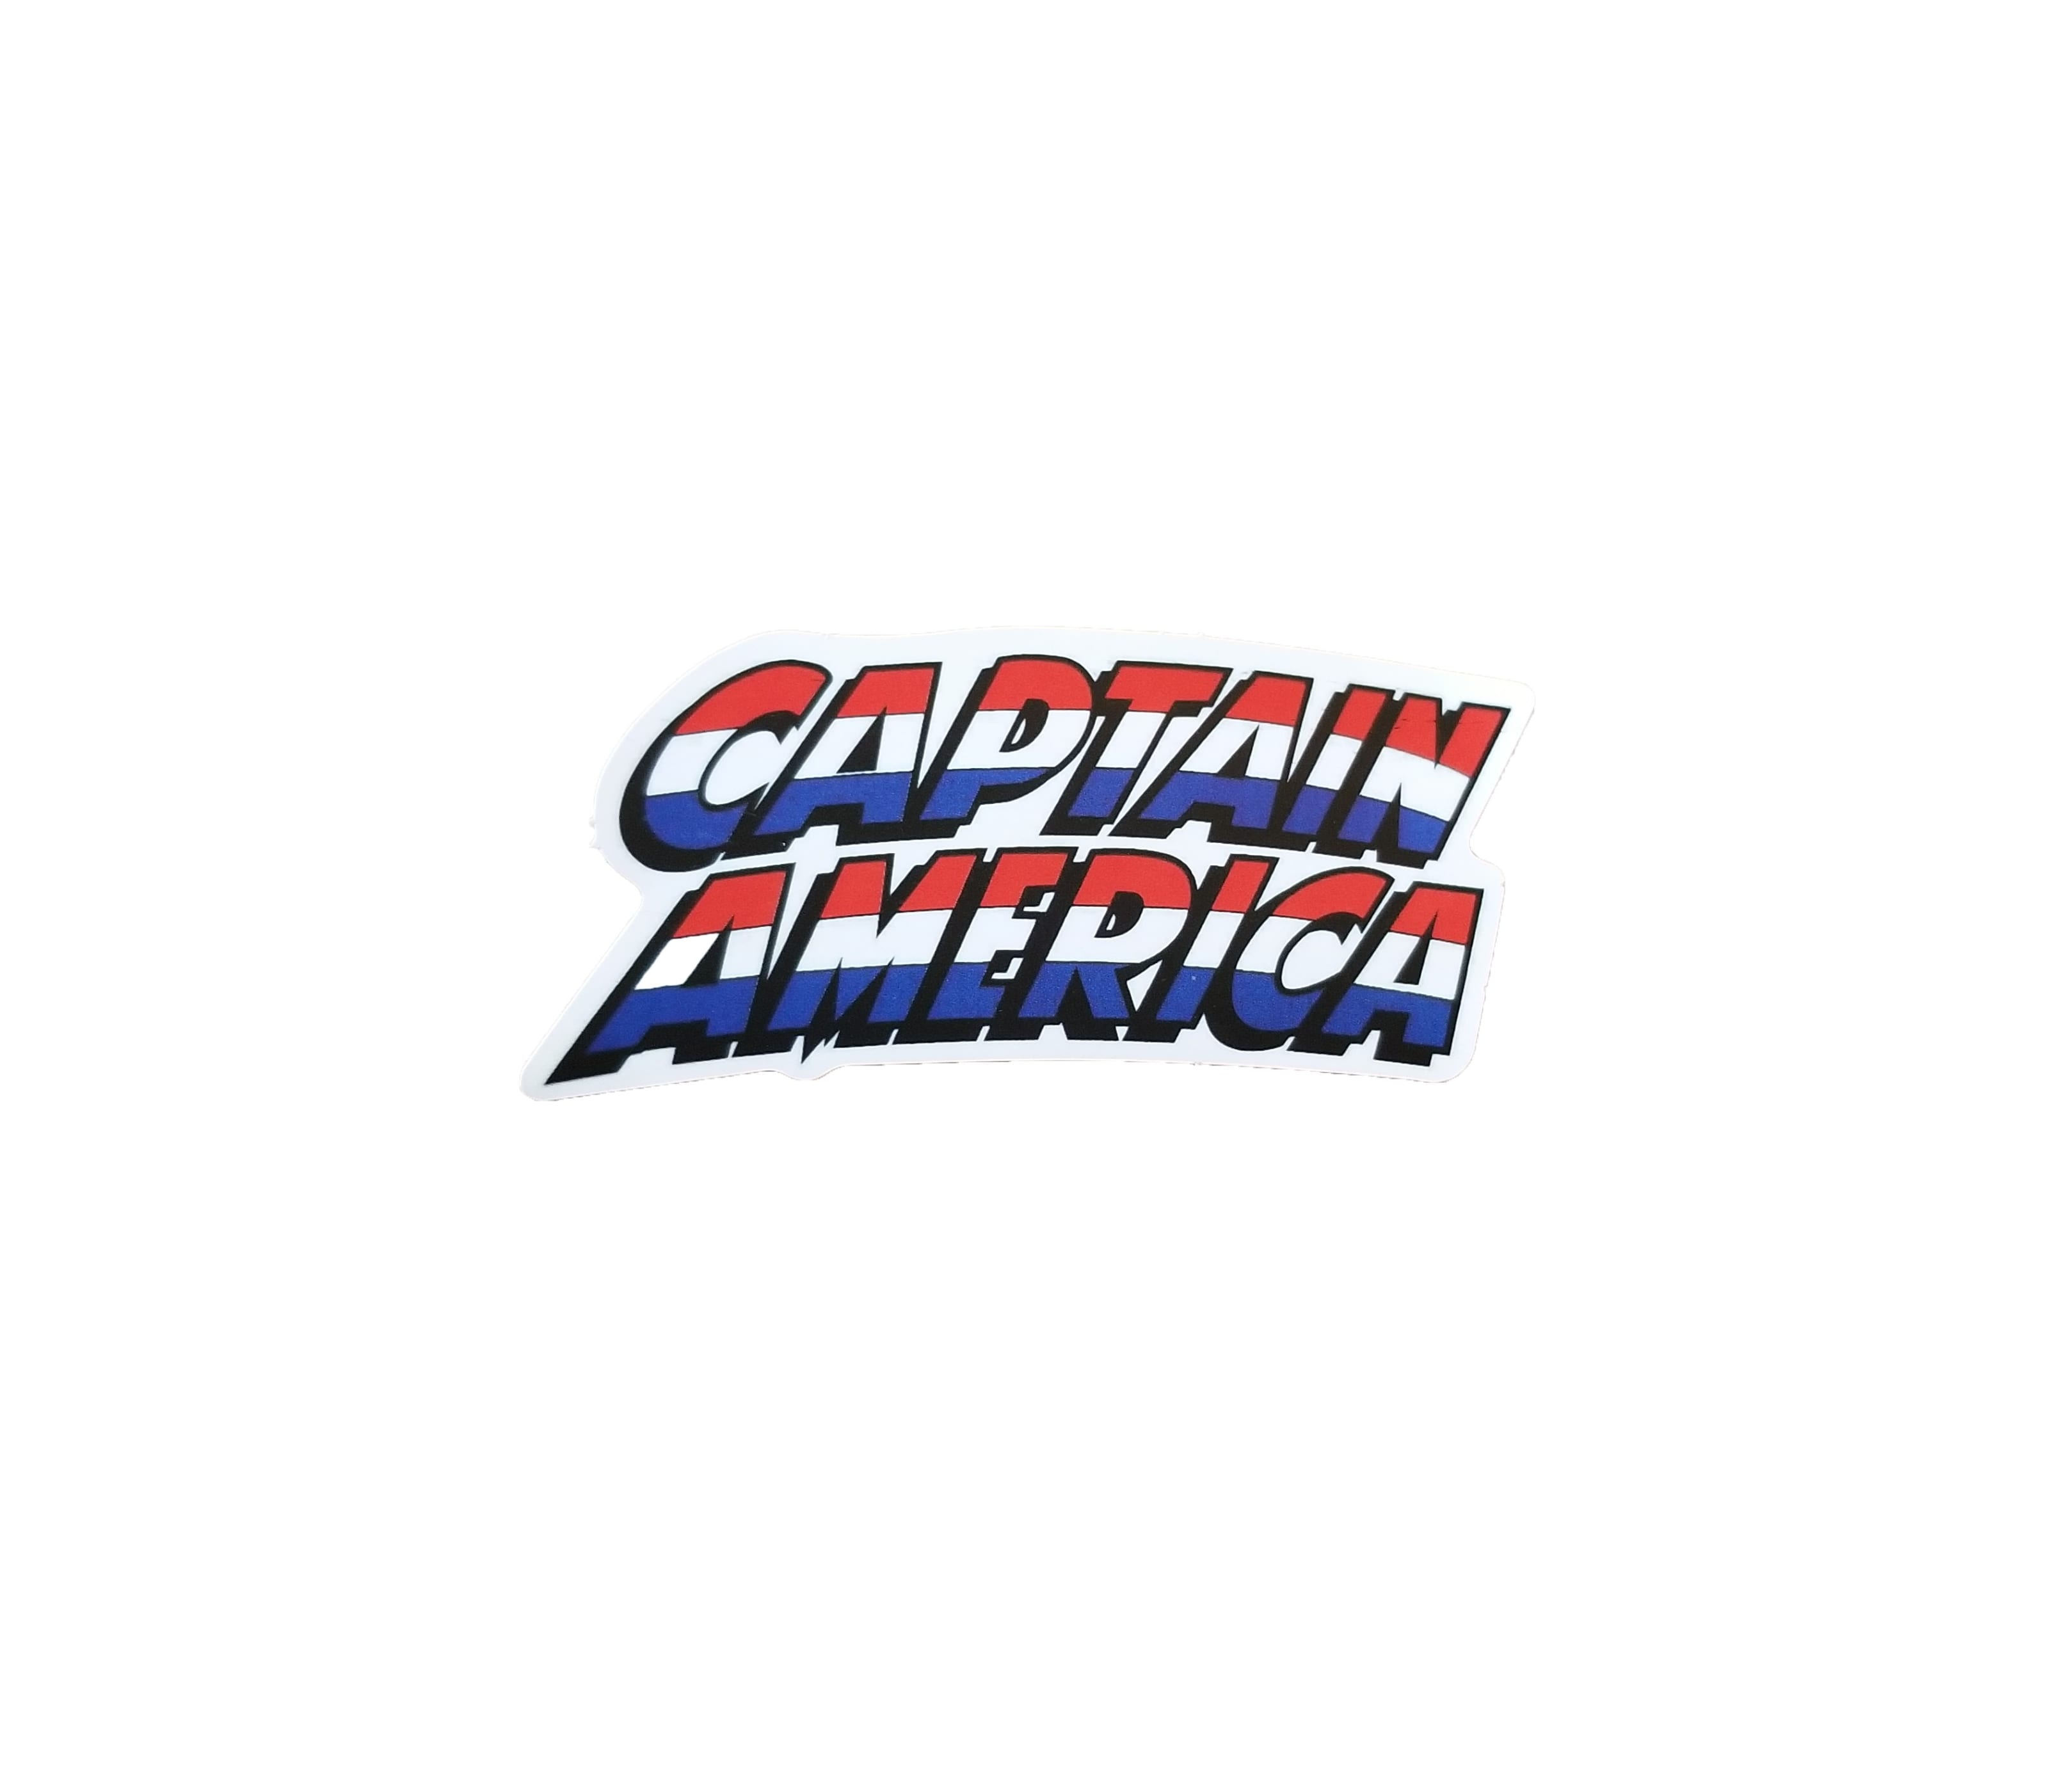 Captain America Logo, Sticker shows the name "Captain America"